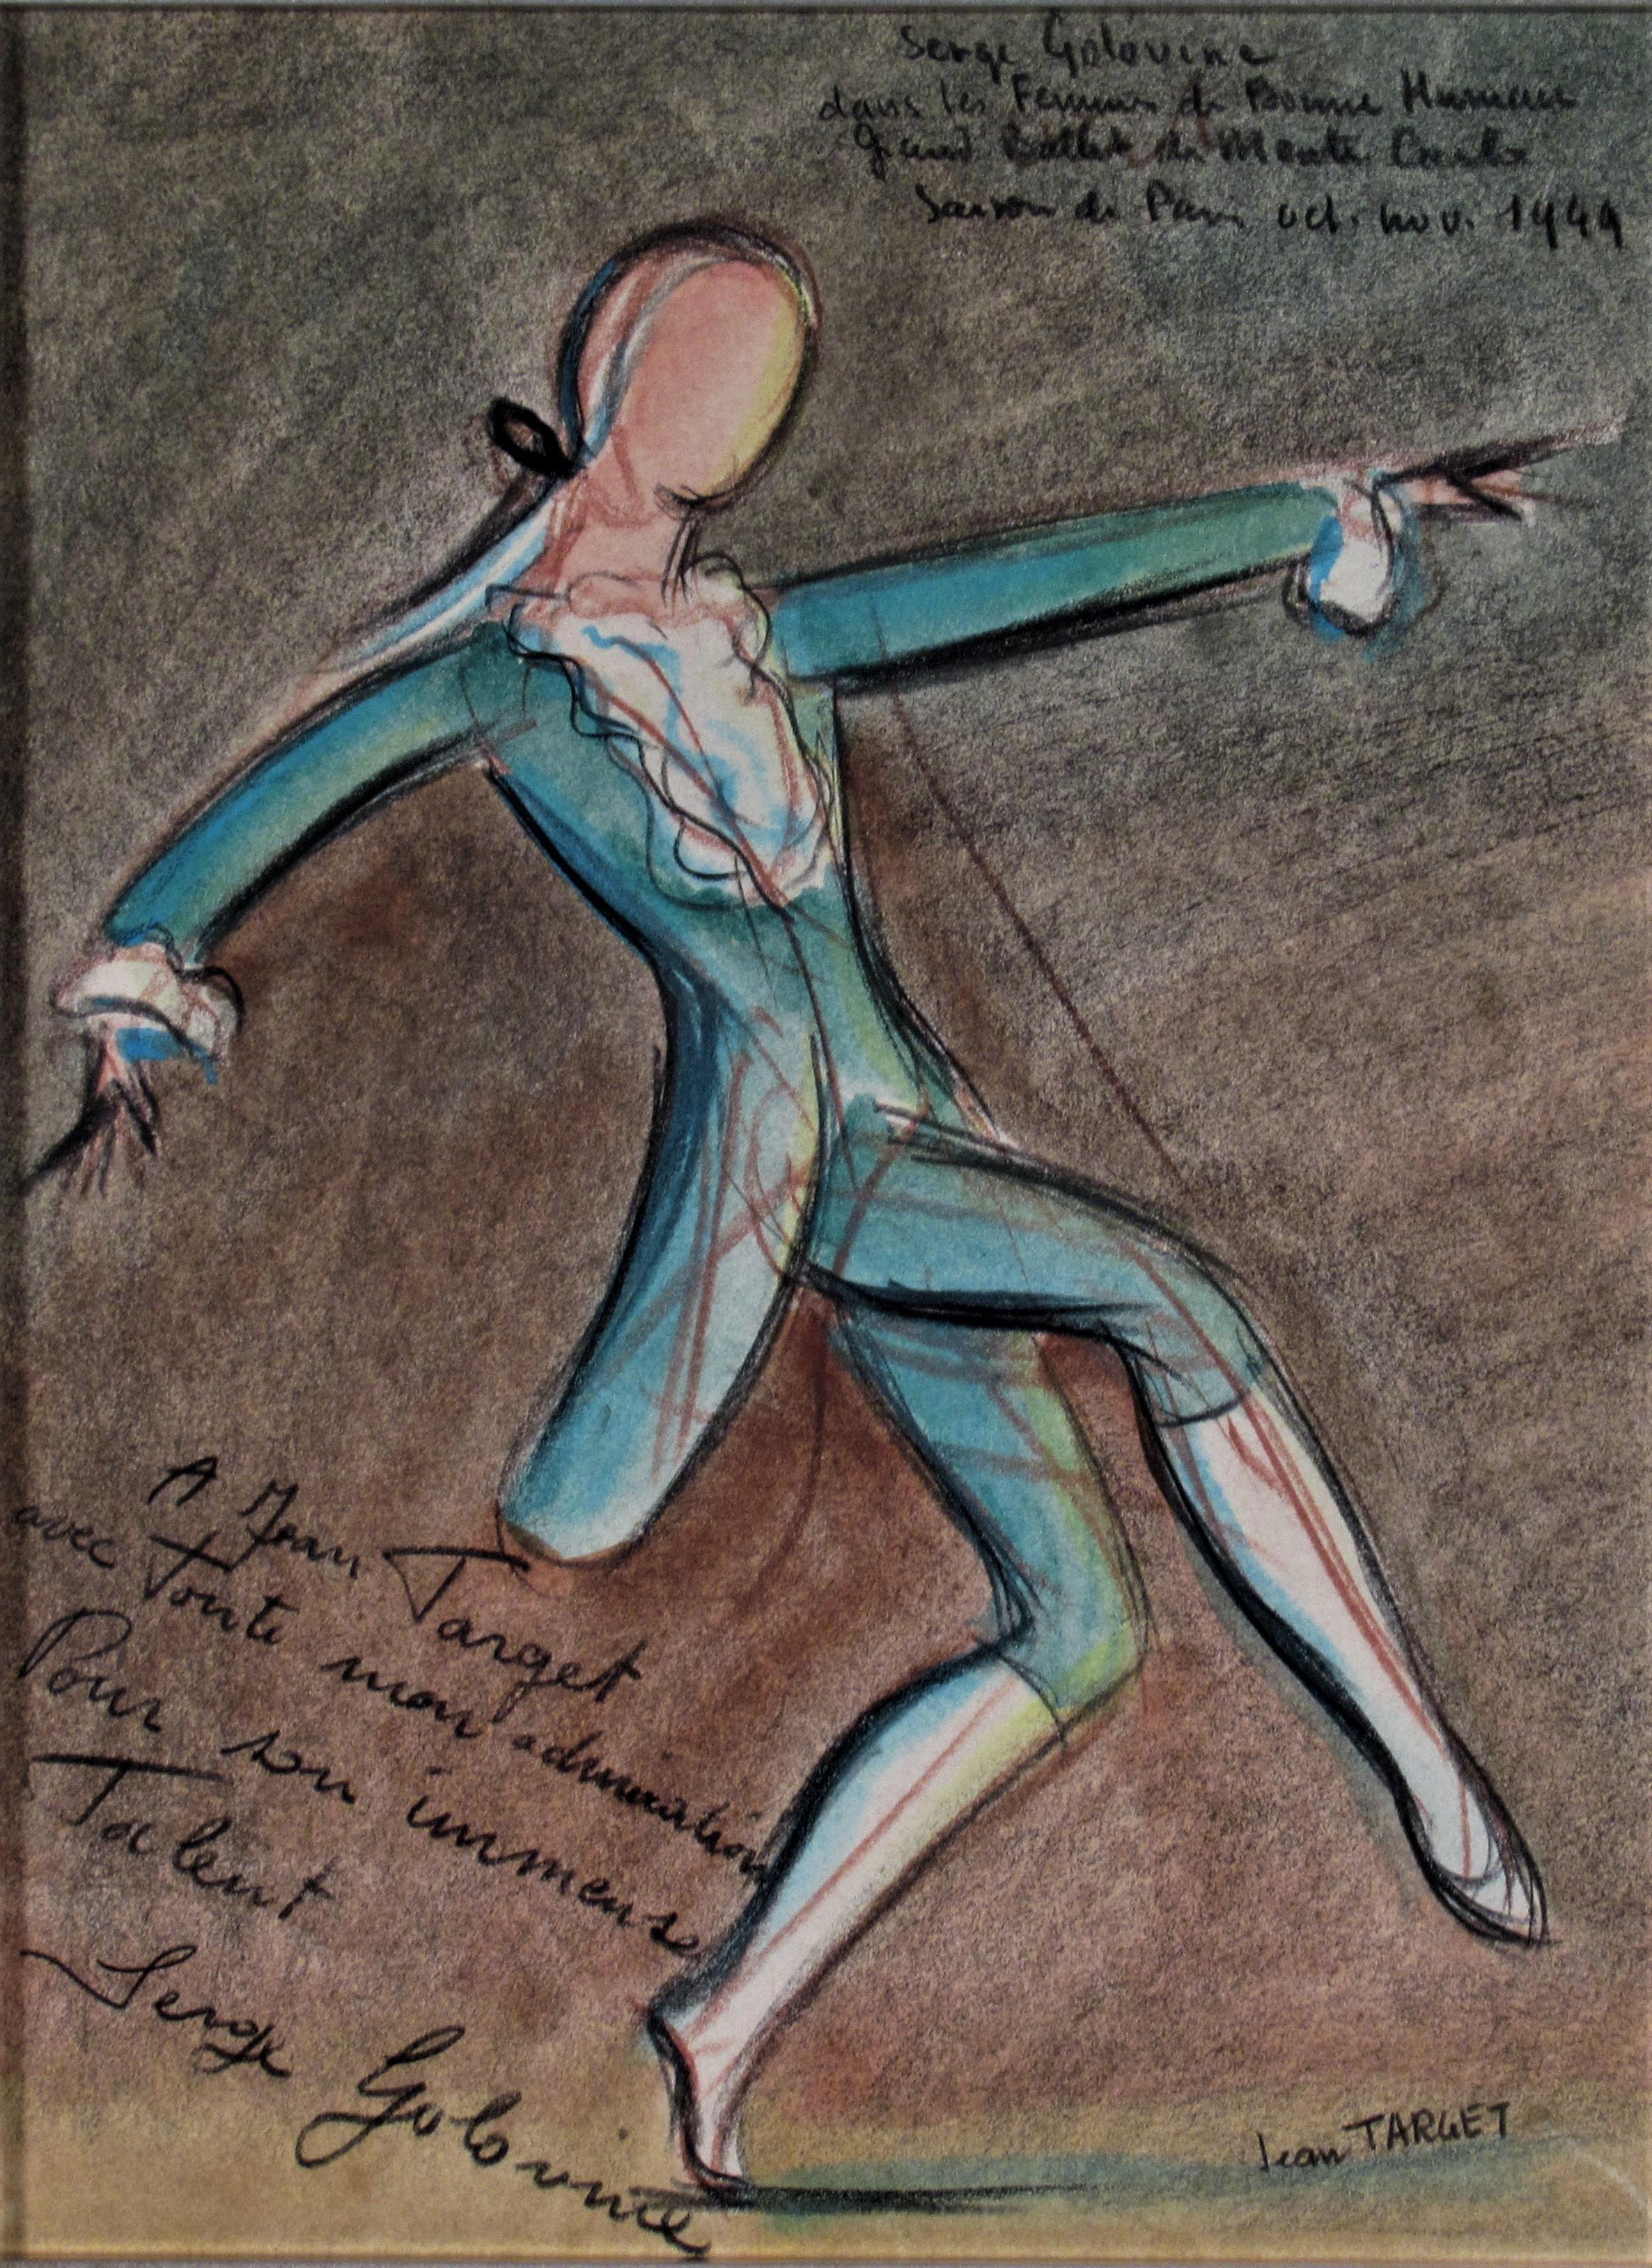 Serge Golovine, Grand Ballet de Monte Carlo, 1949 - Art by Jean Target